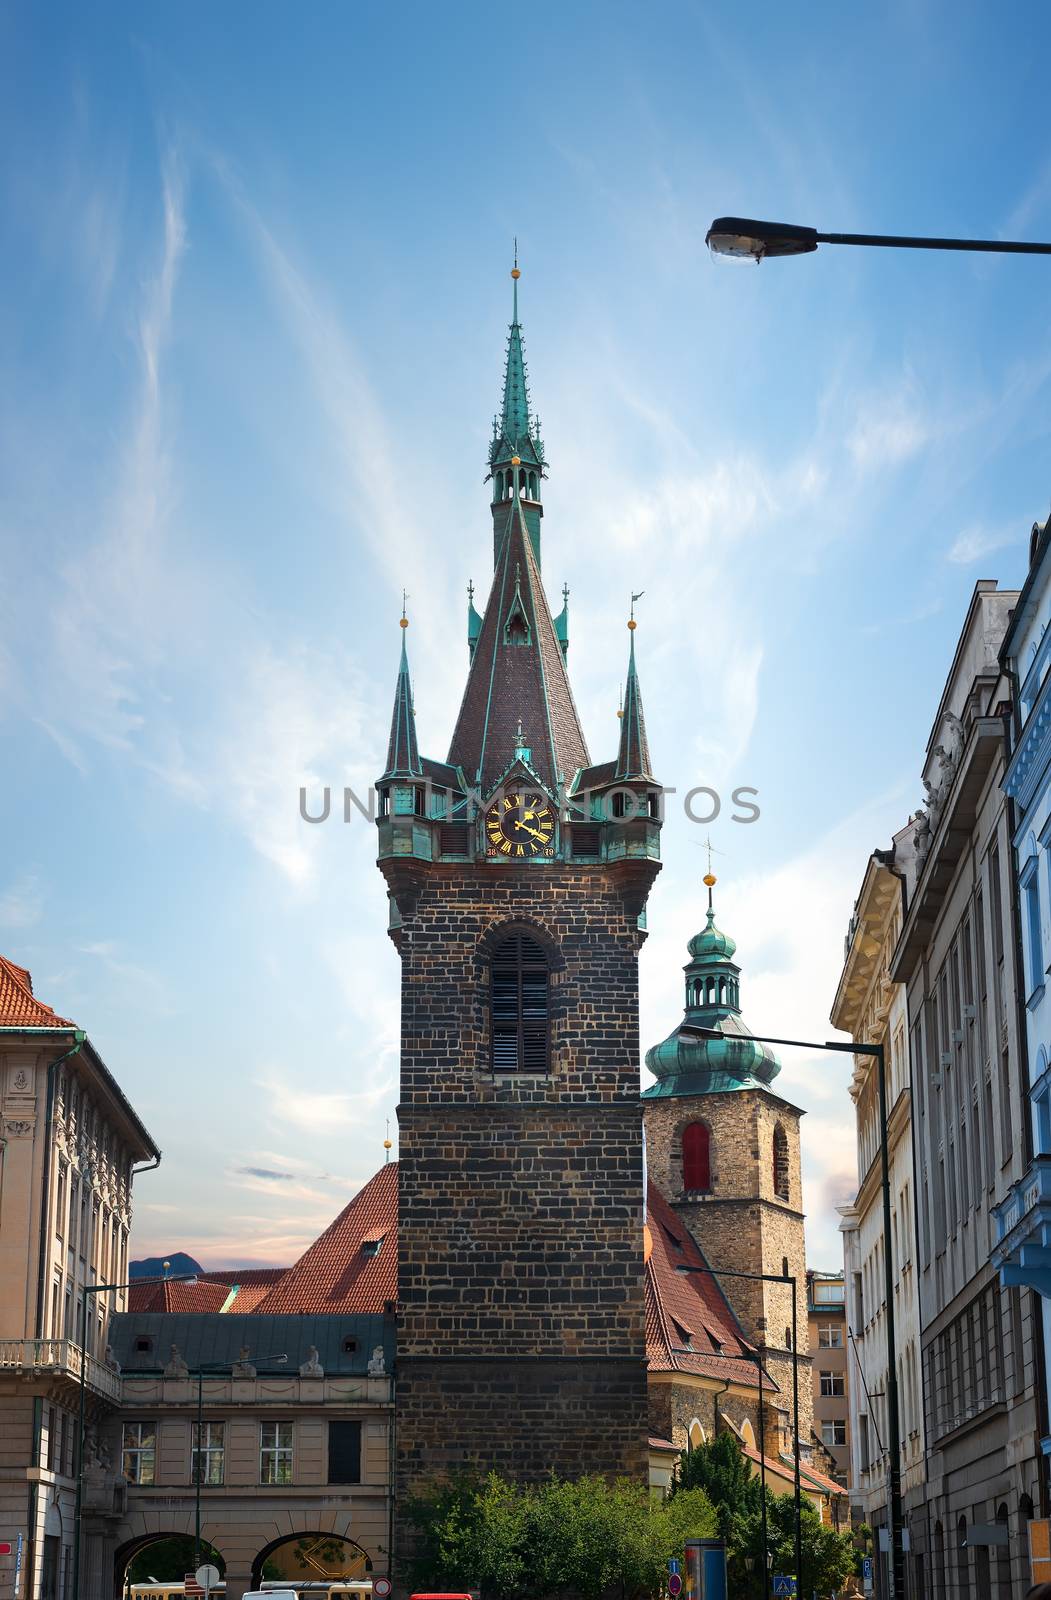 Jindrisska Tower - the highest belfry in Prague